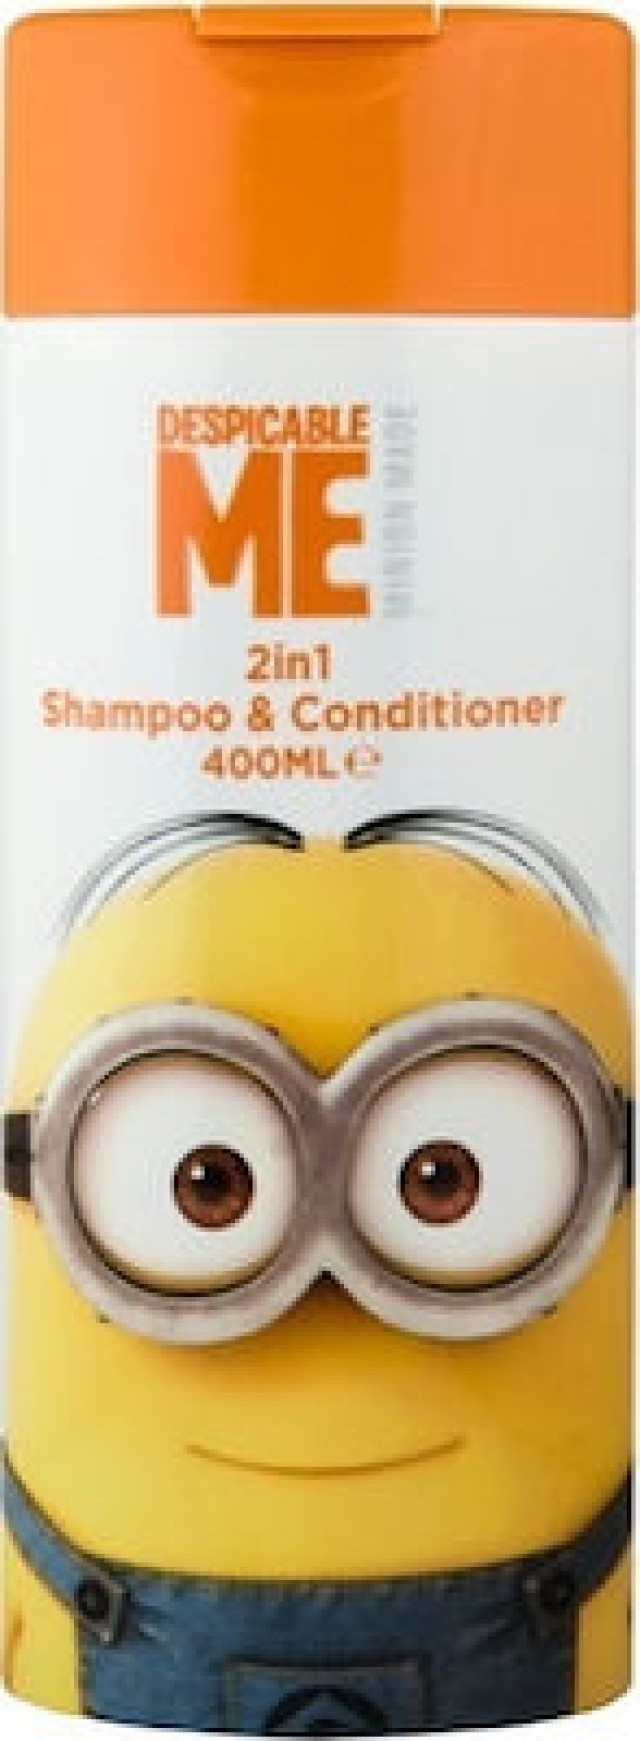 AIR_VAL Corsair Toiletries Despicable Me Minion 2 in 1 Shampoo & Conditioner για Παιδιά, 400ml